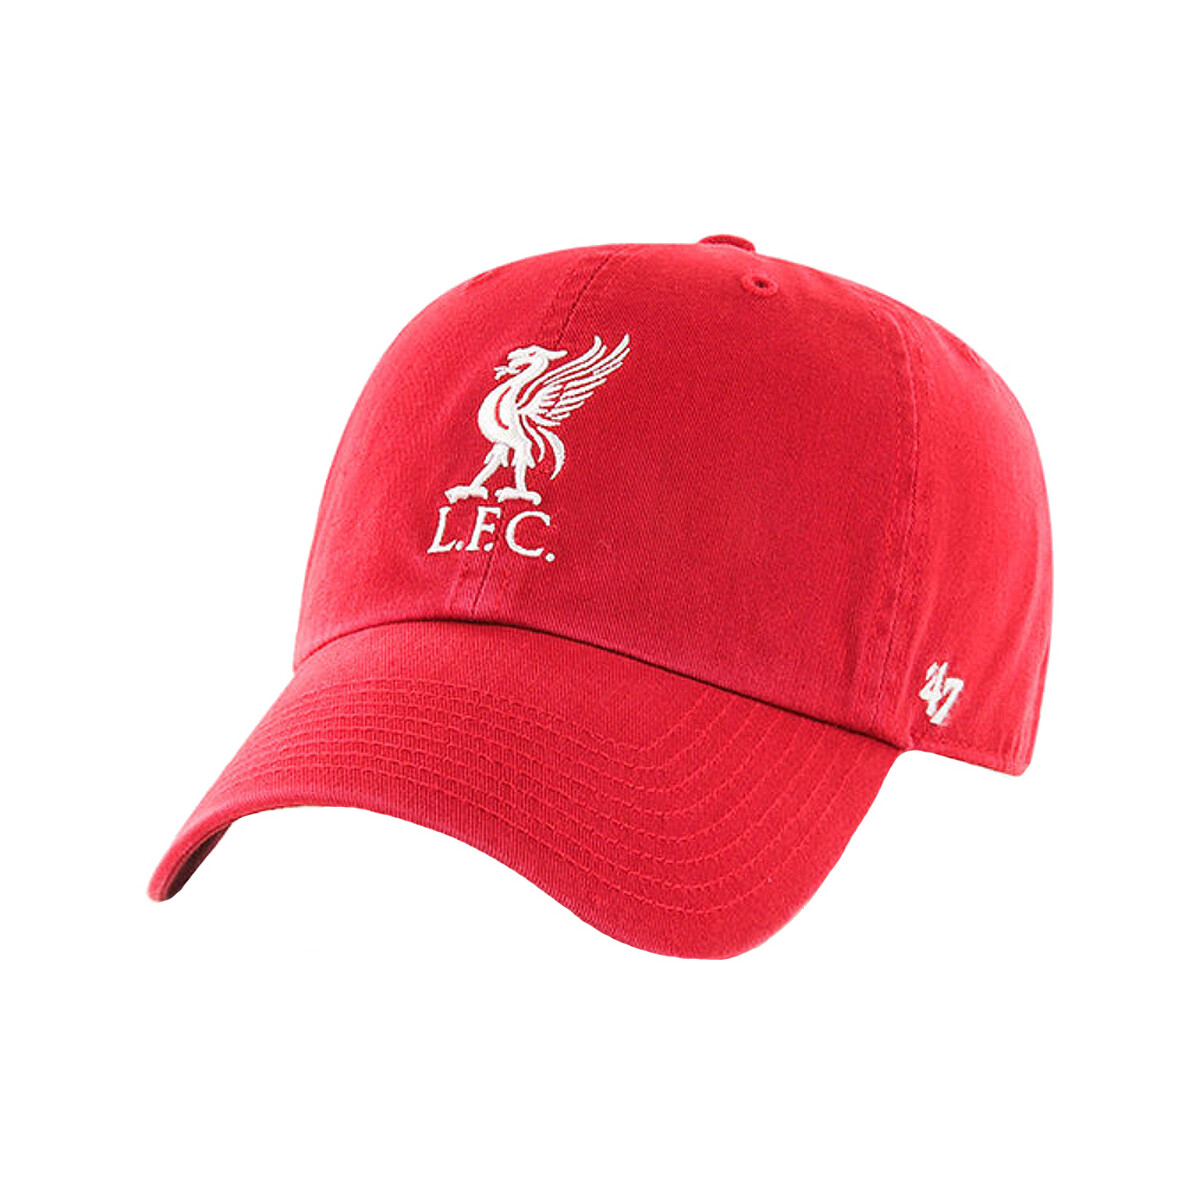 Accesorios textil Hombre Gorra '47 Brand EPL FC Liverpool Cap Rojo